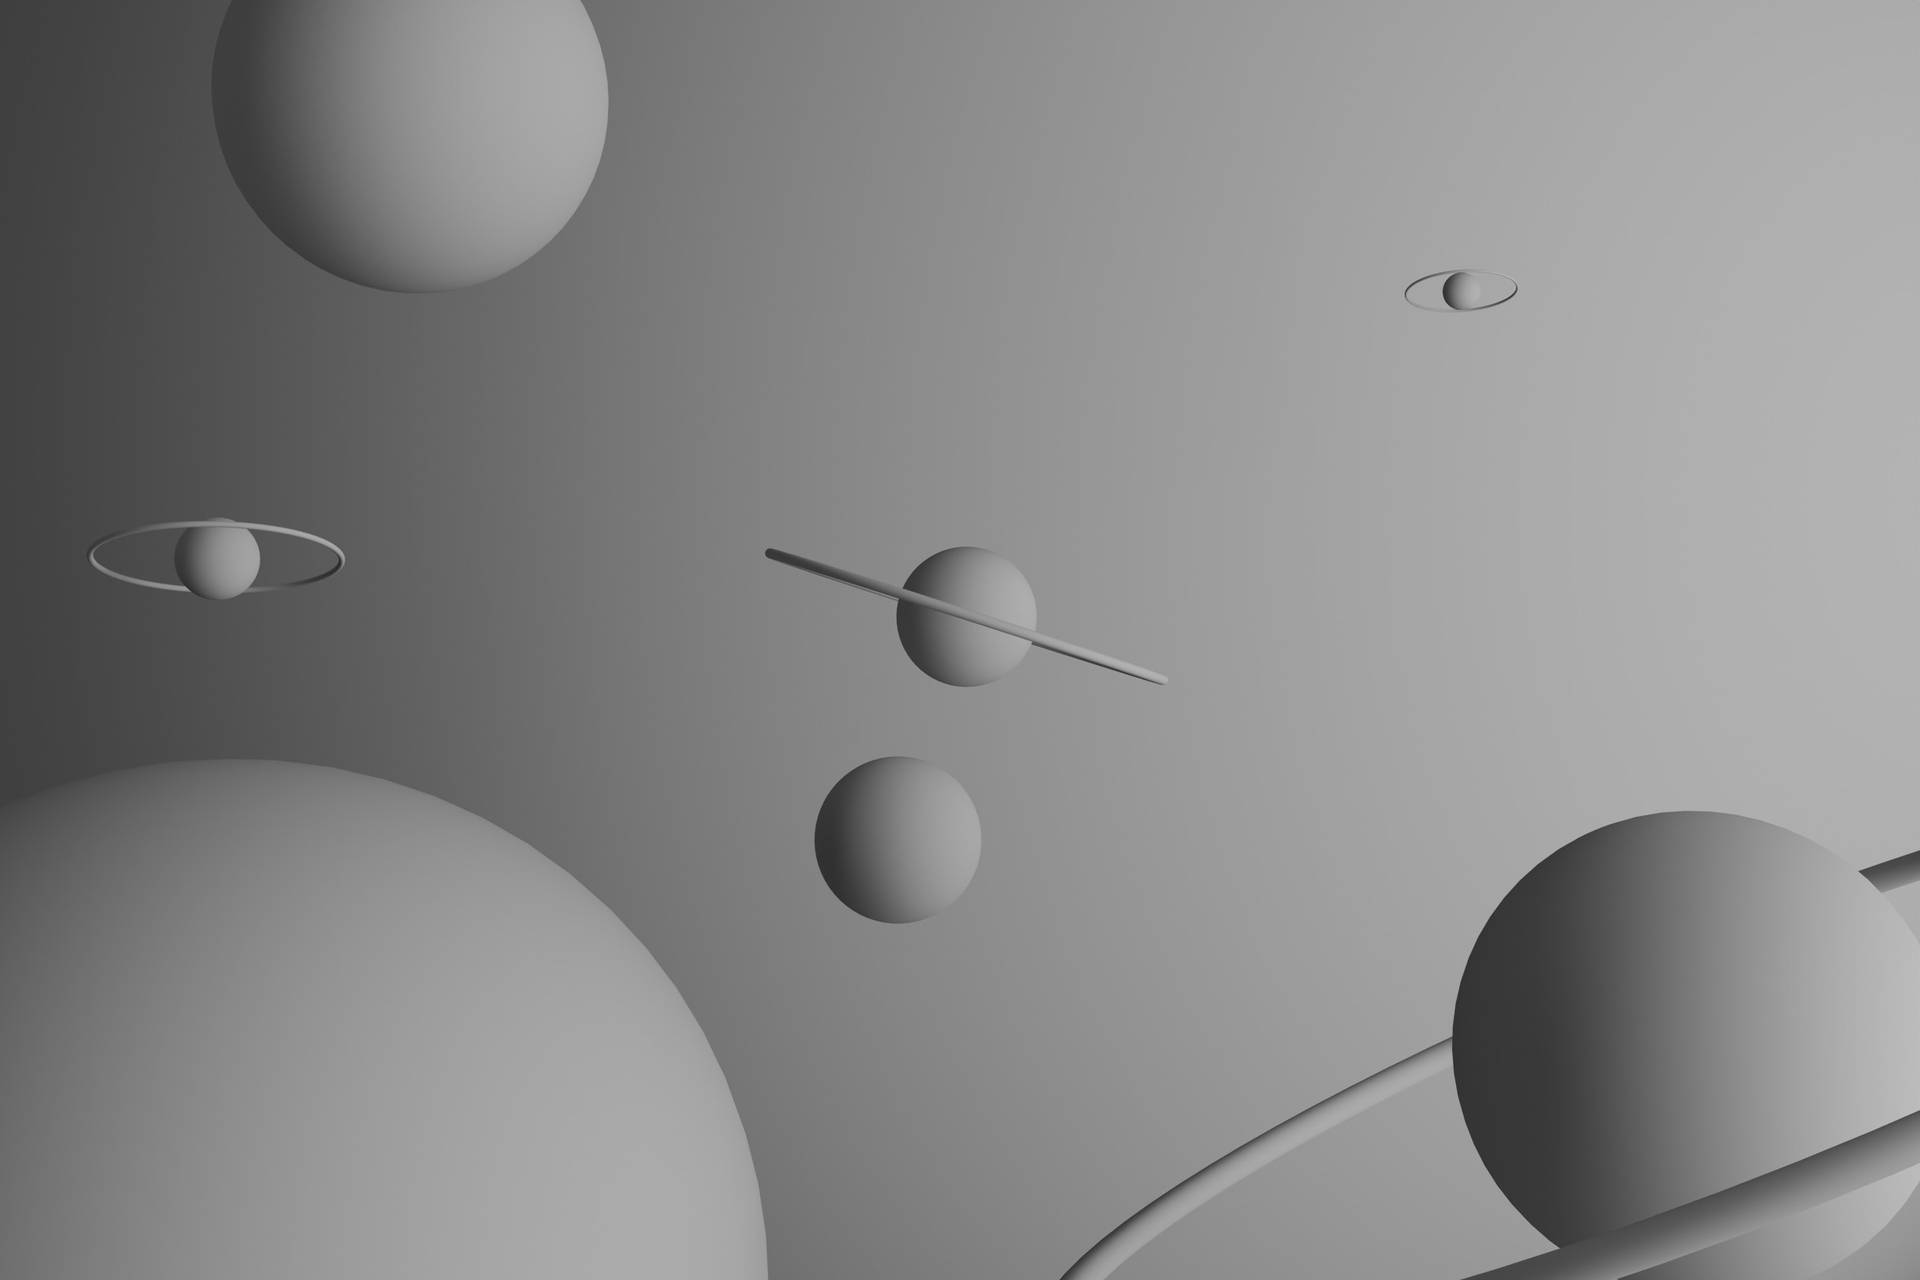 Light Grey Planets Animated Desktop Wallpaper